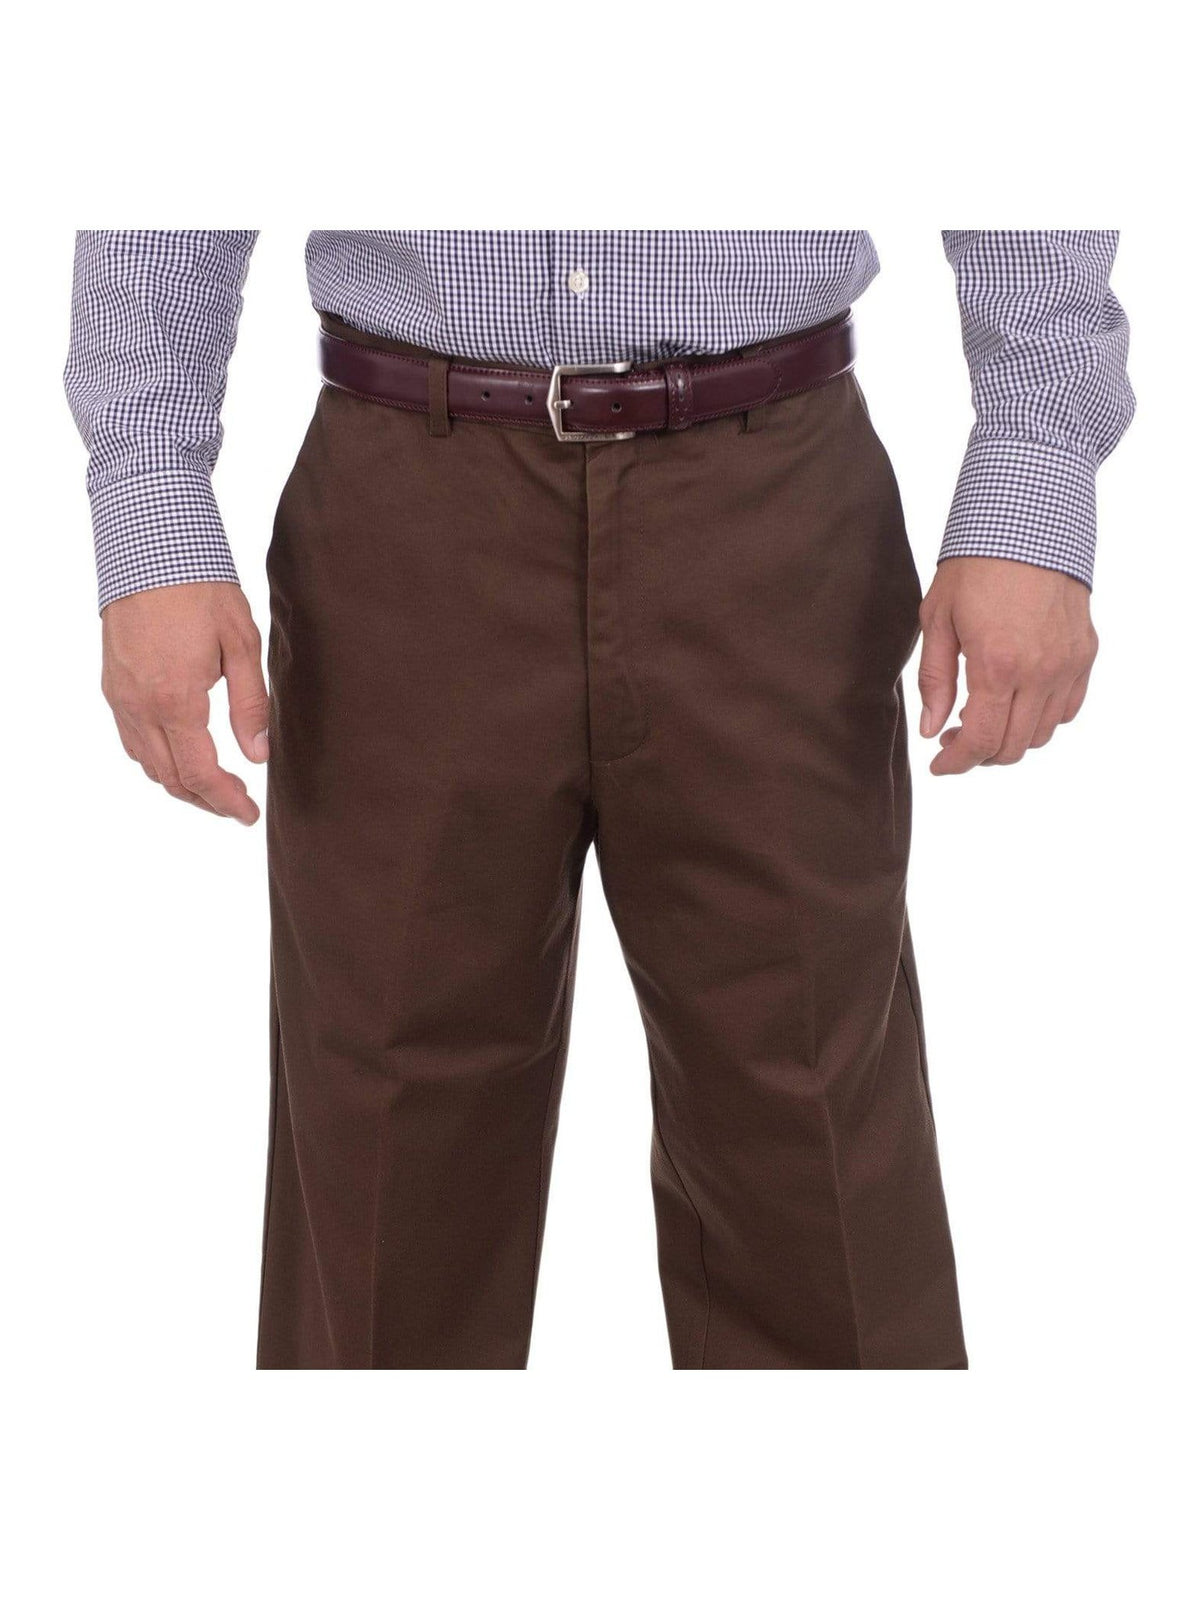 Haggar Sale Pants 33X30 Haggar Mens Classic Fit Solid Brown Flat Front Non Iron Cotton Khaki Pants